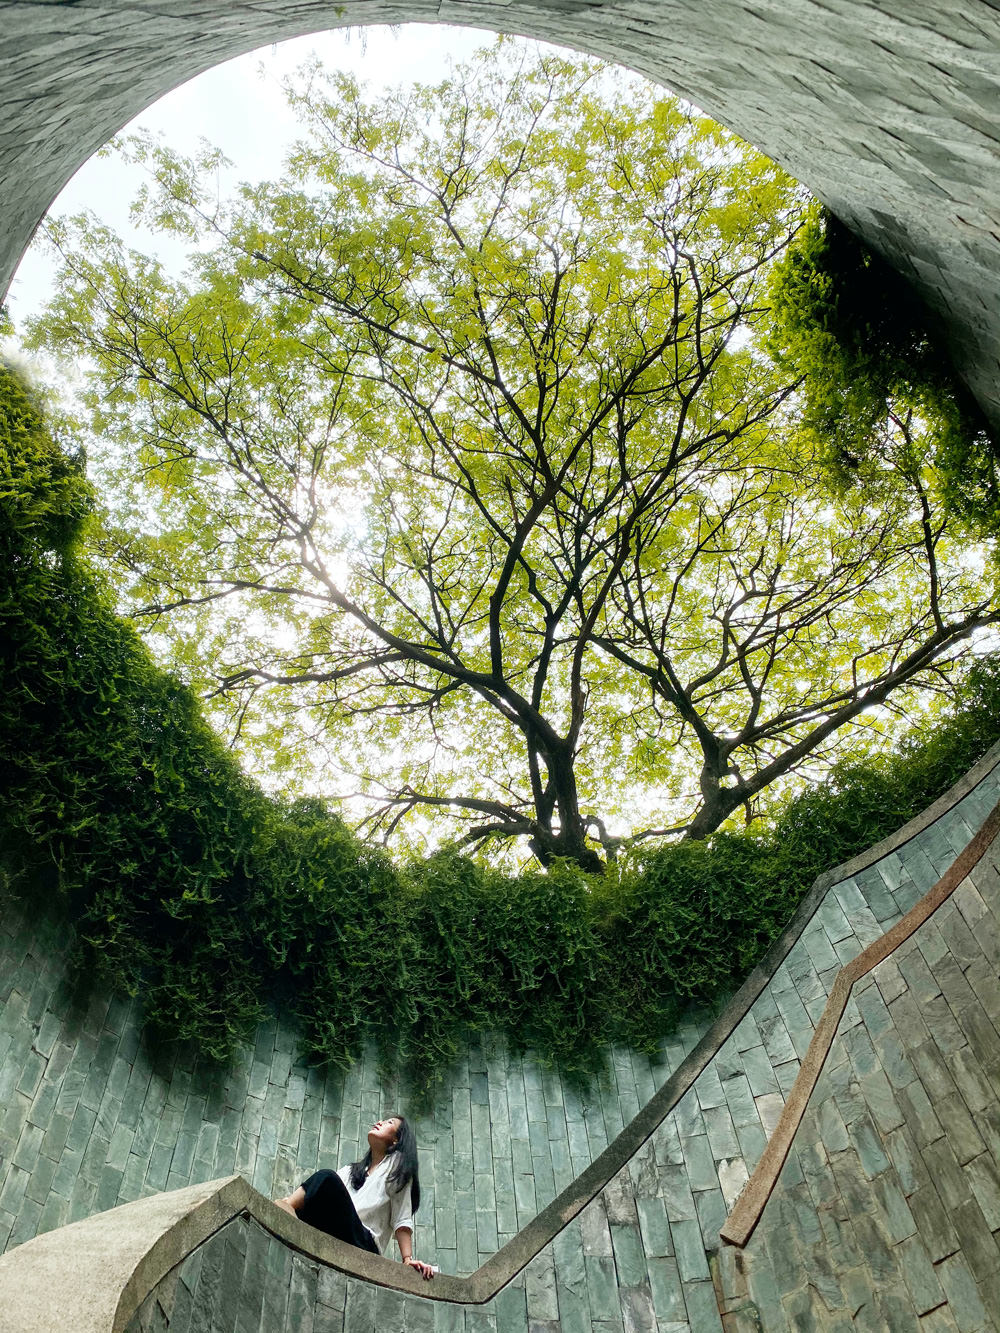 Tree Tunnel at Fort Canning Park. Photo: Kelvin Han / Unsplash